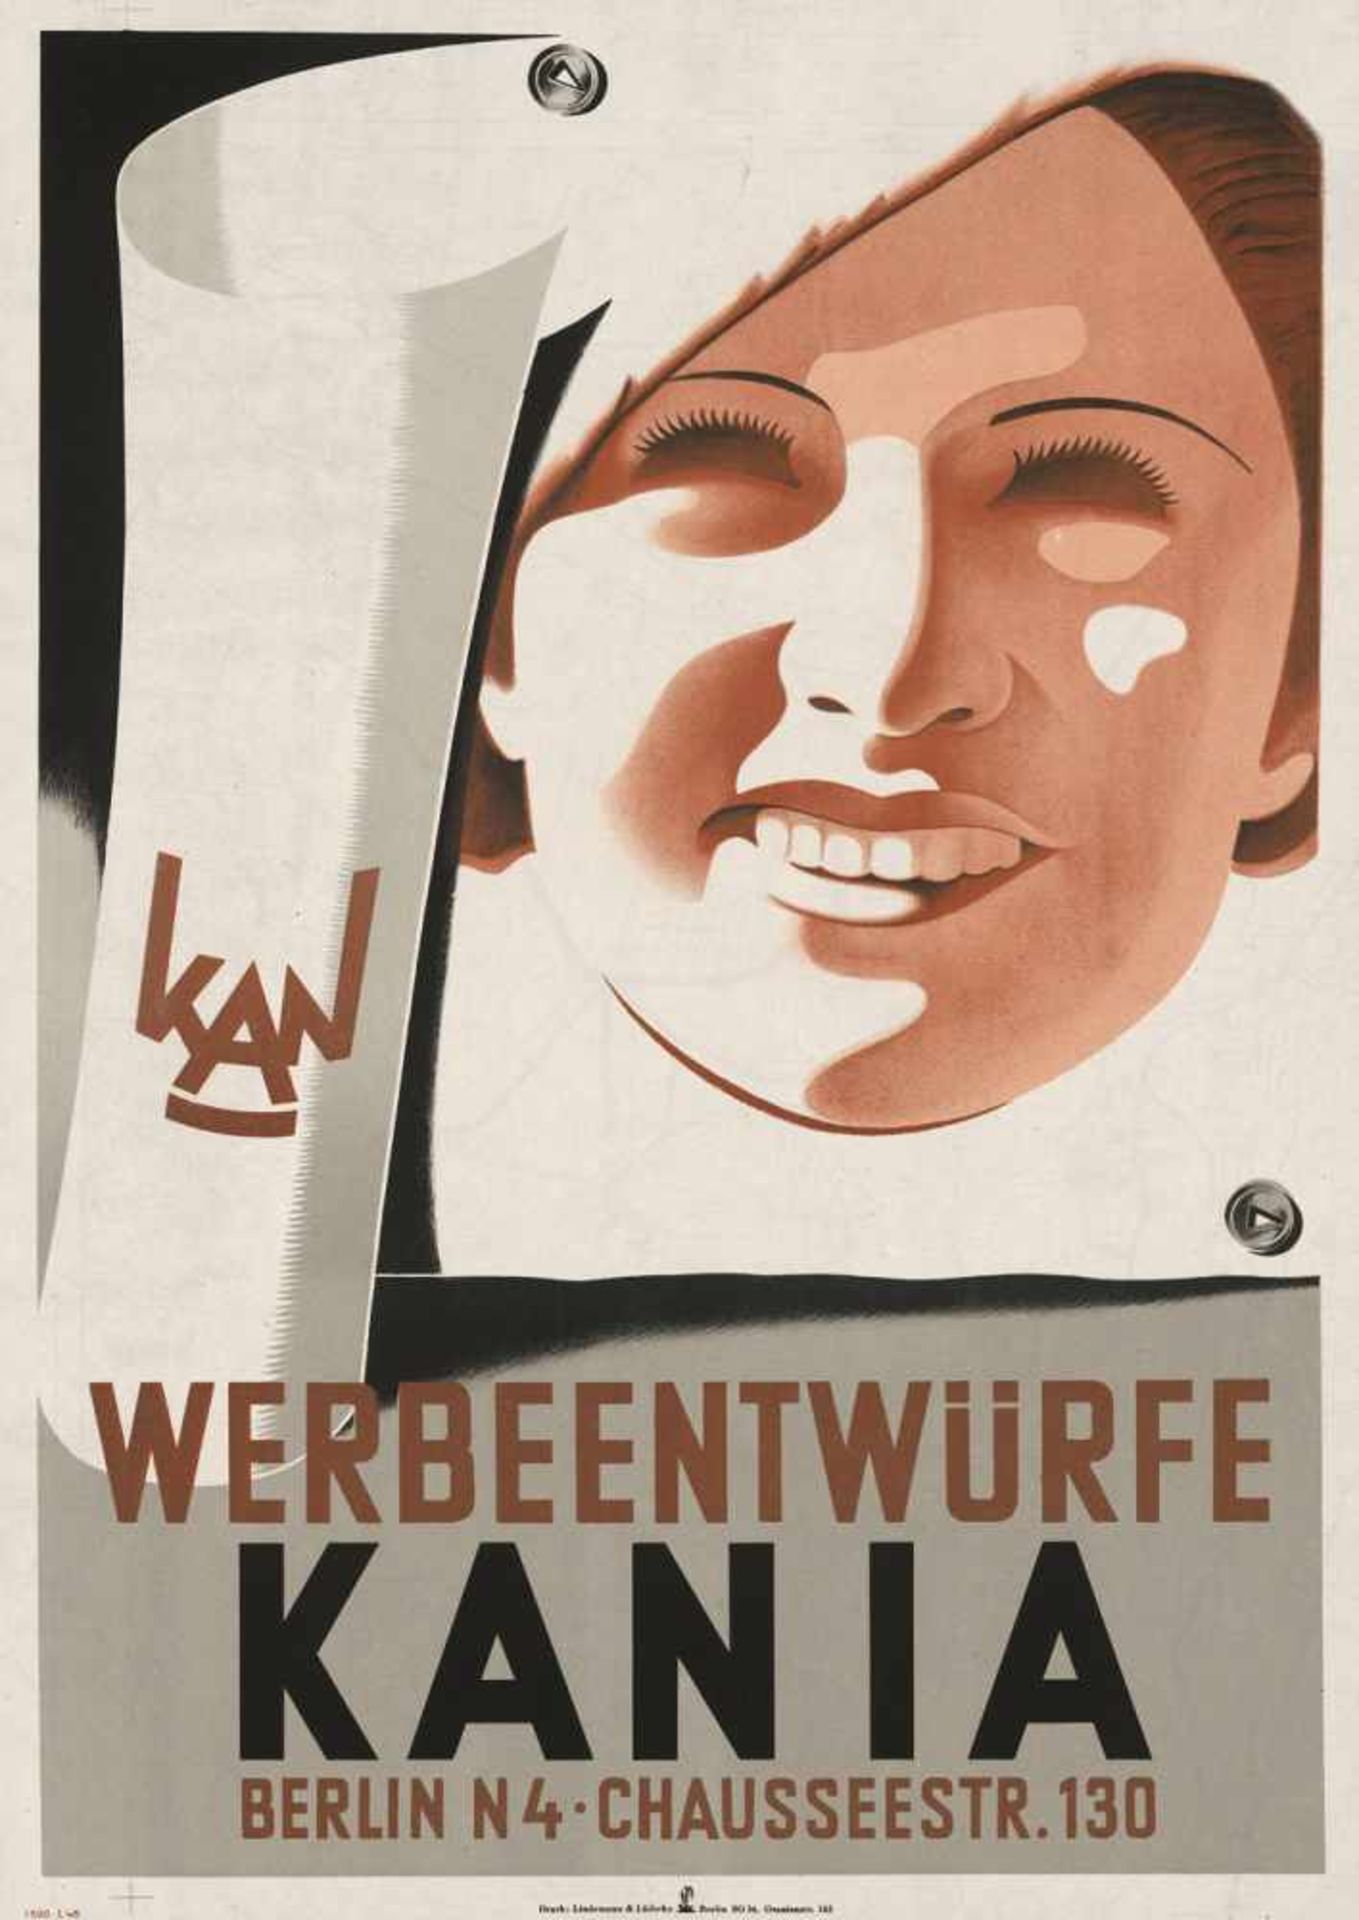 Kan: Werbeentwürfe Kania BerlinKan. Werbeentwürfe Kania Berlin N4, Chausseestr. 130.